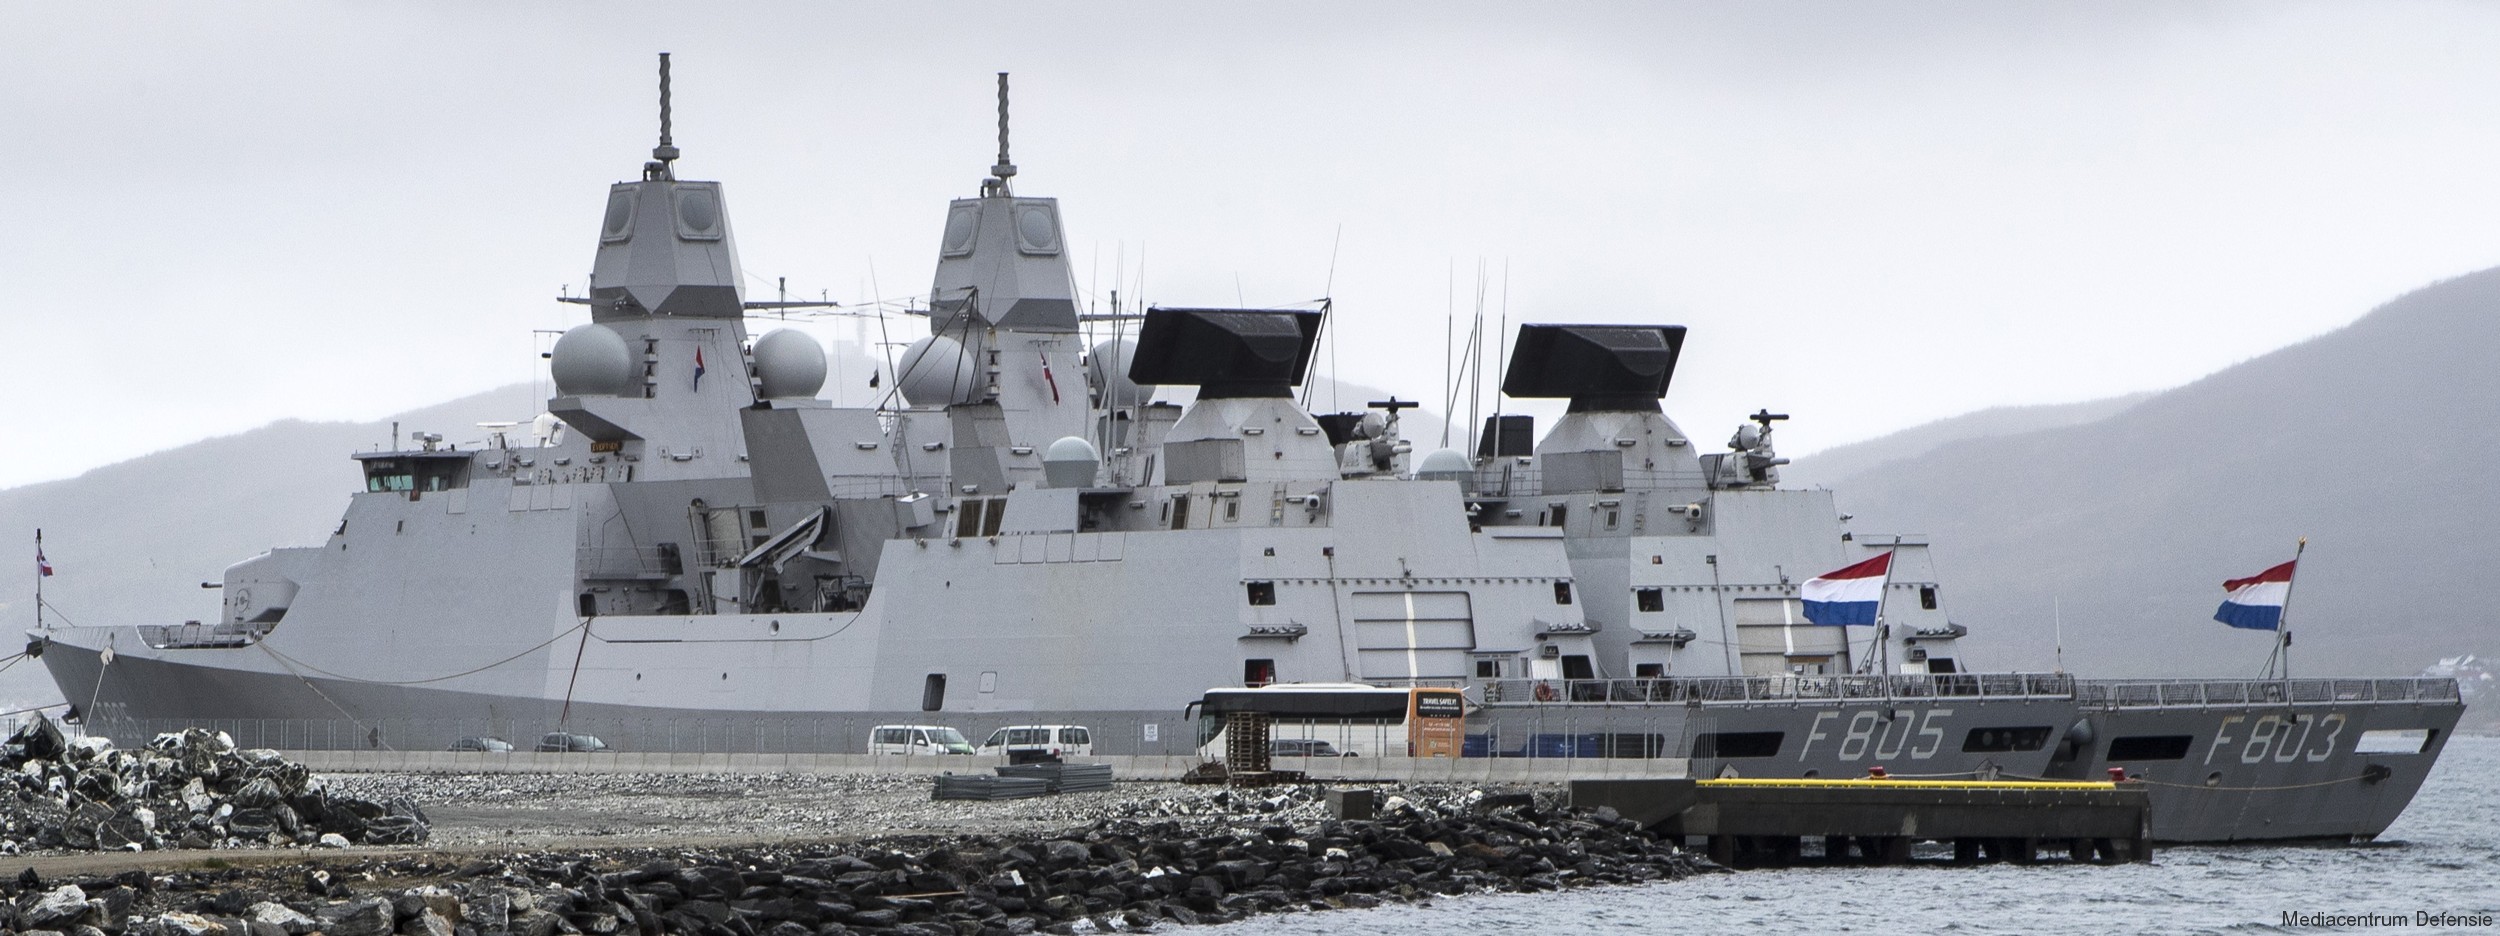 f-805 hnlms evertsen guided missile frigate ffg lcf royal netherlands navy 11